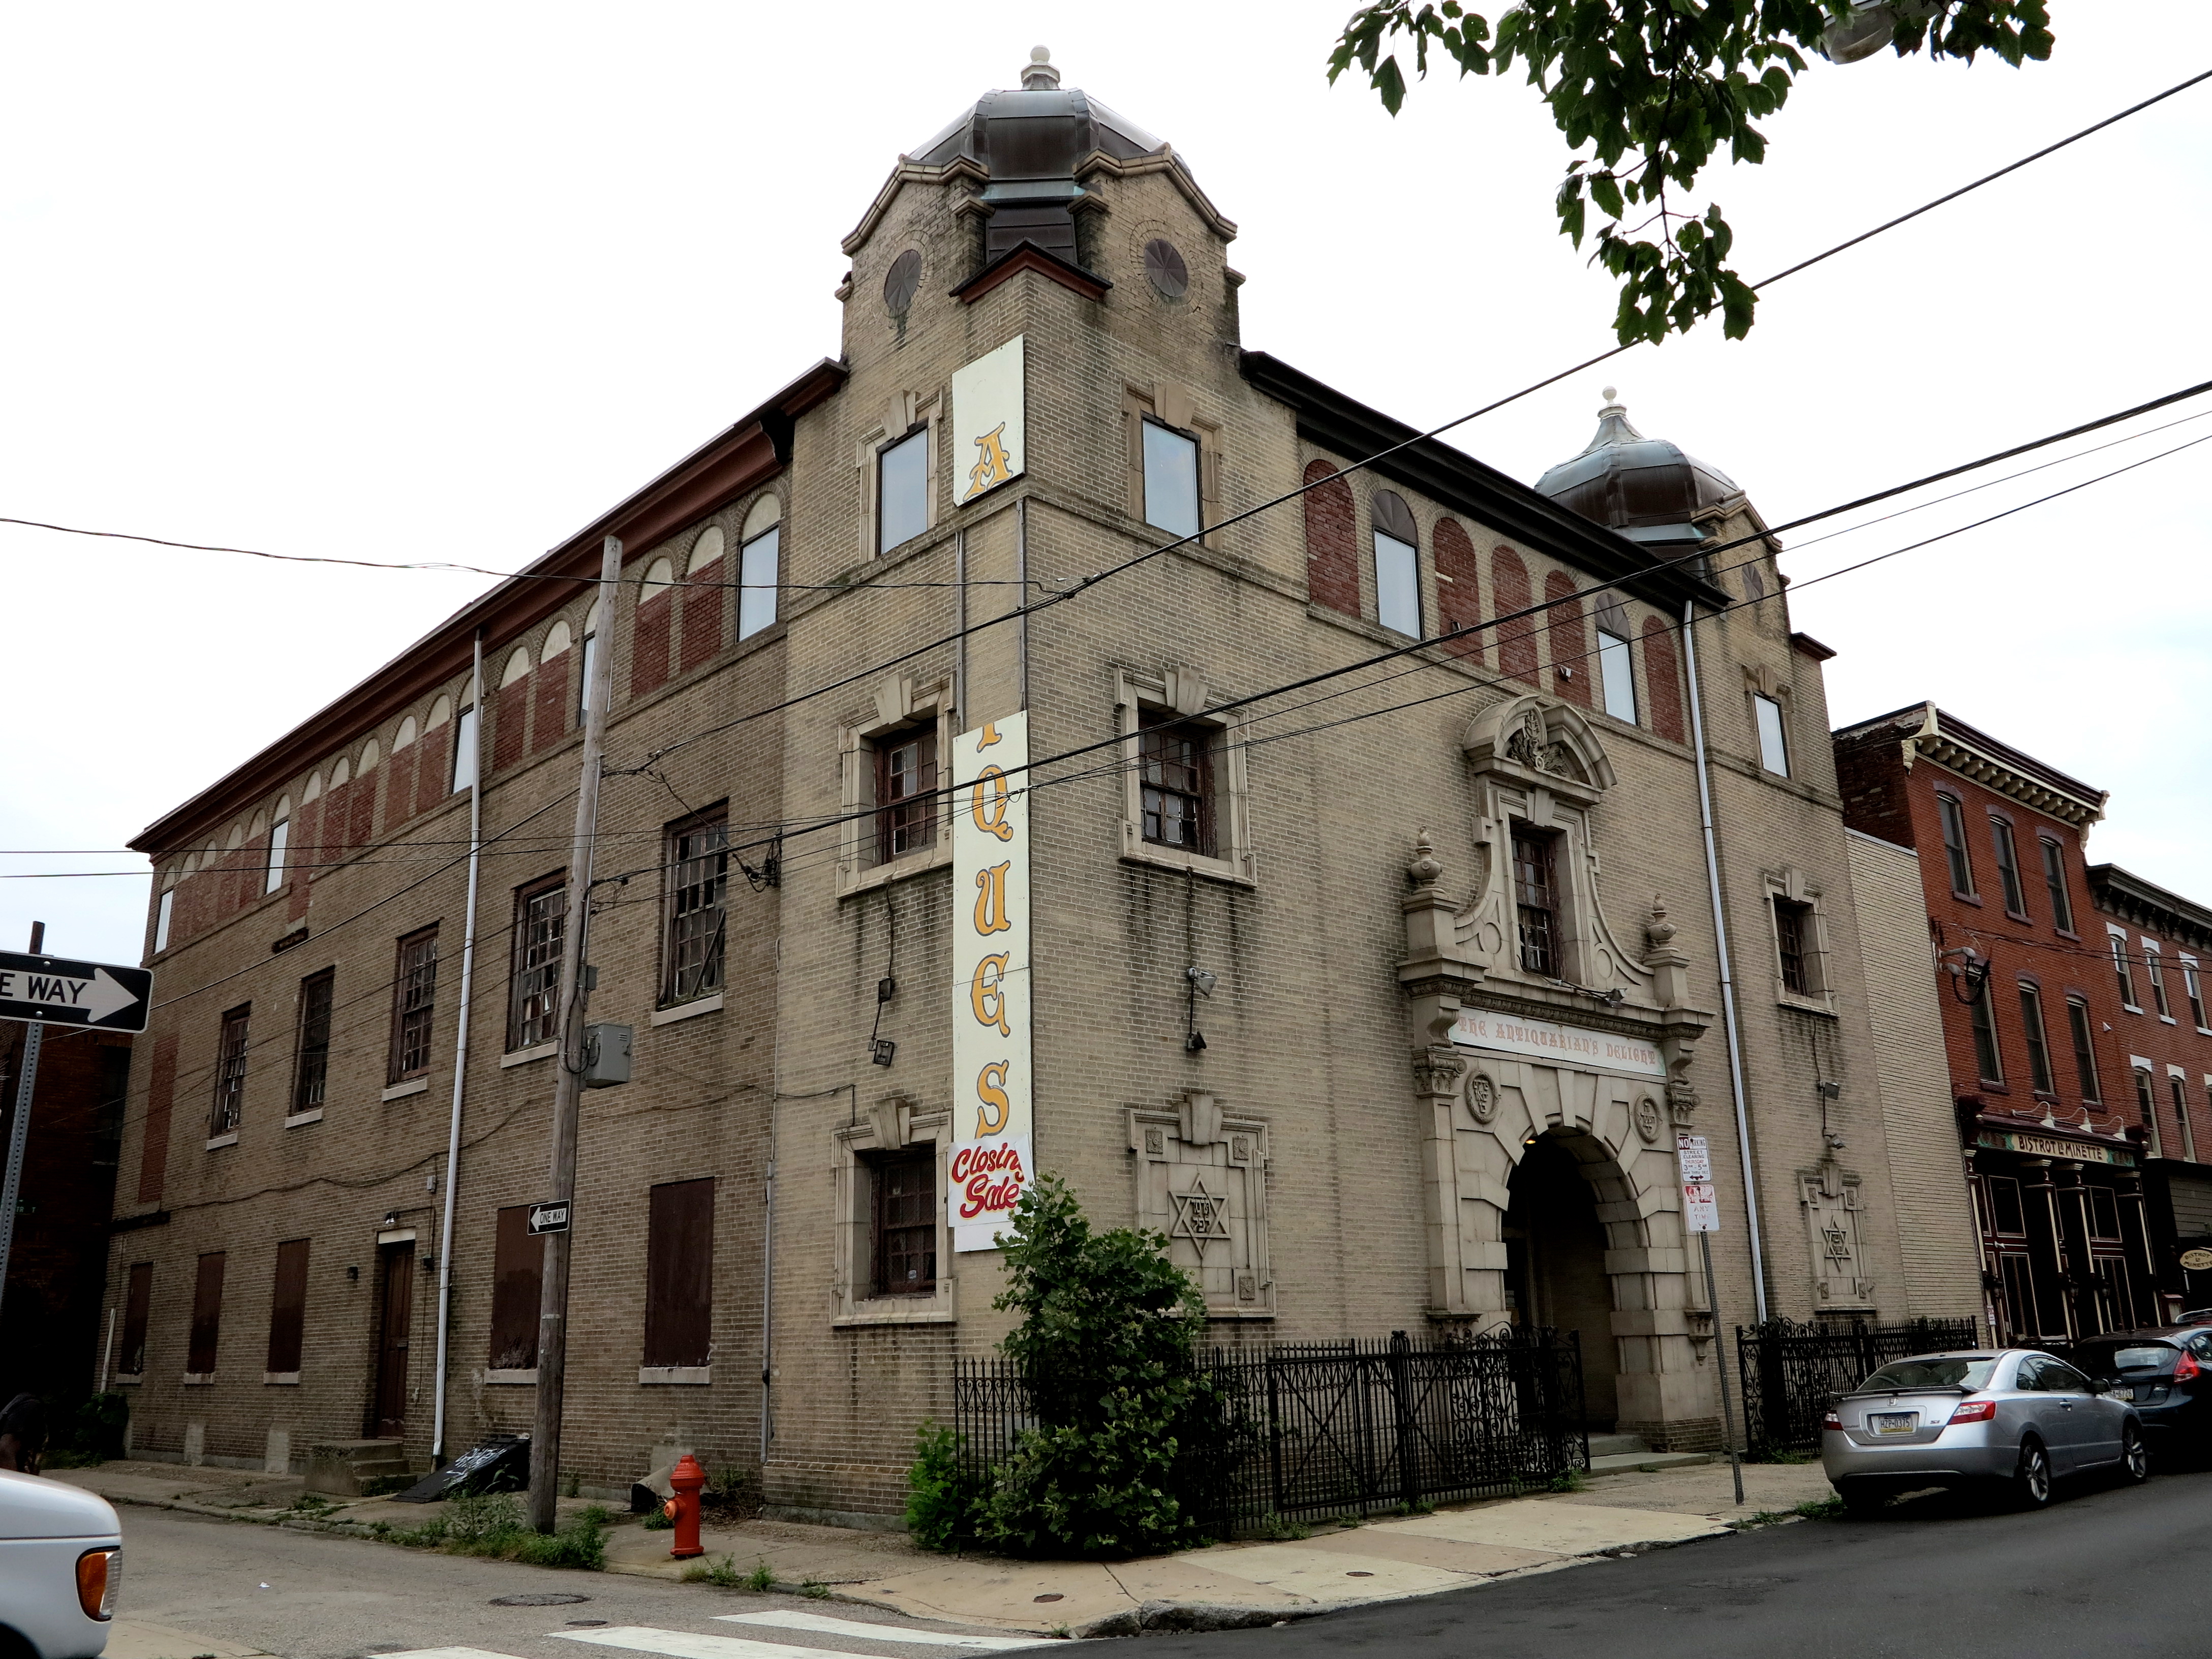 Congregation Chevra B'nai Ruben built the synagogue at 615 South 6th Street in 1905